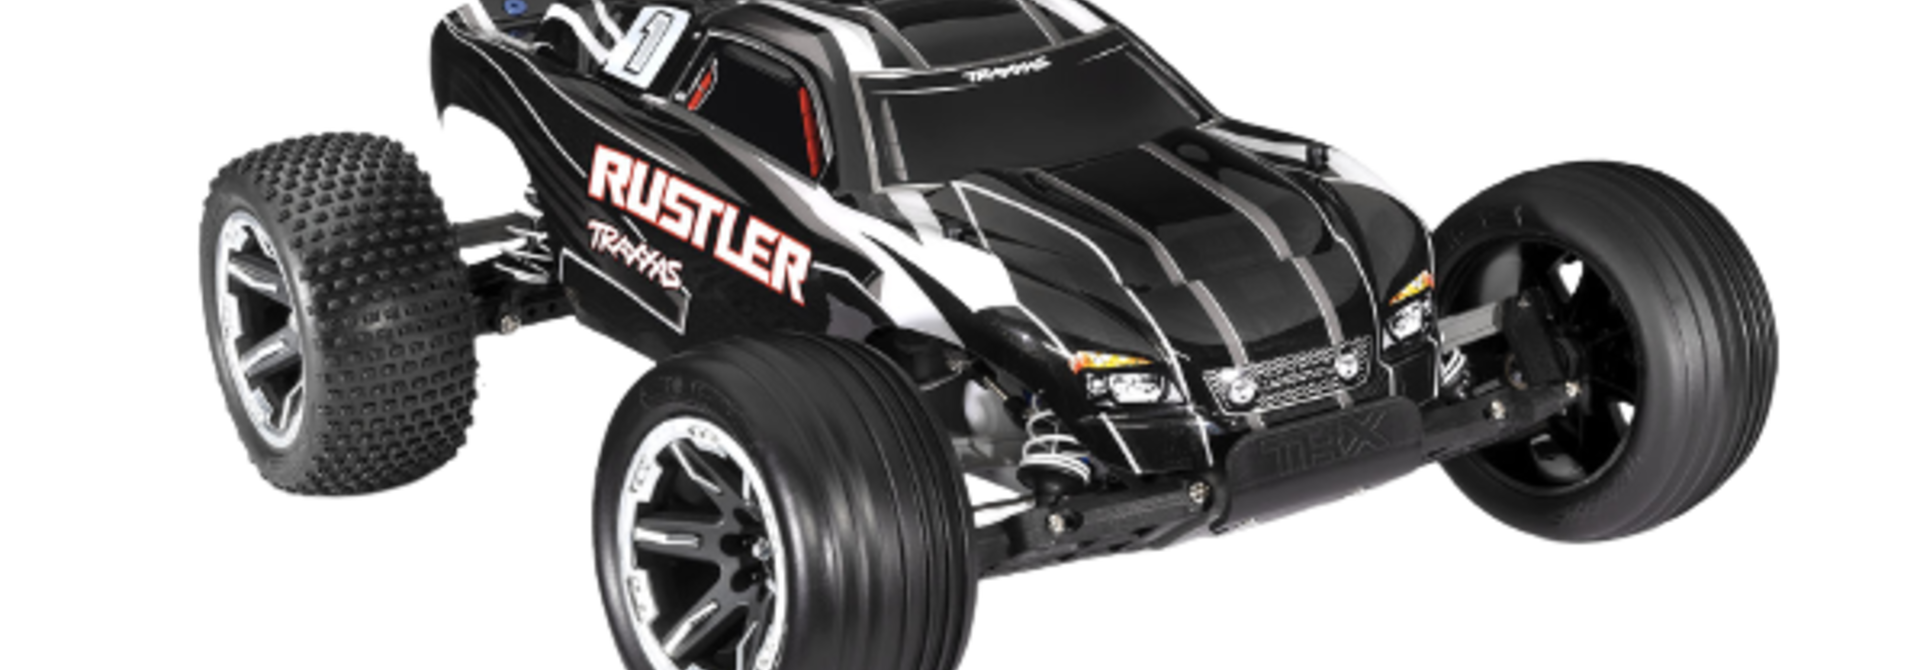 Rustler: 1/10 Scale Stadium Truck TQ 2.4 GHz w/USB-C - Black TRX37054-8BLK